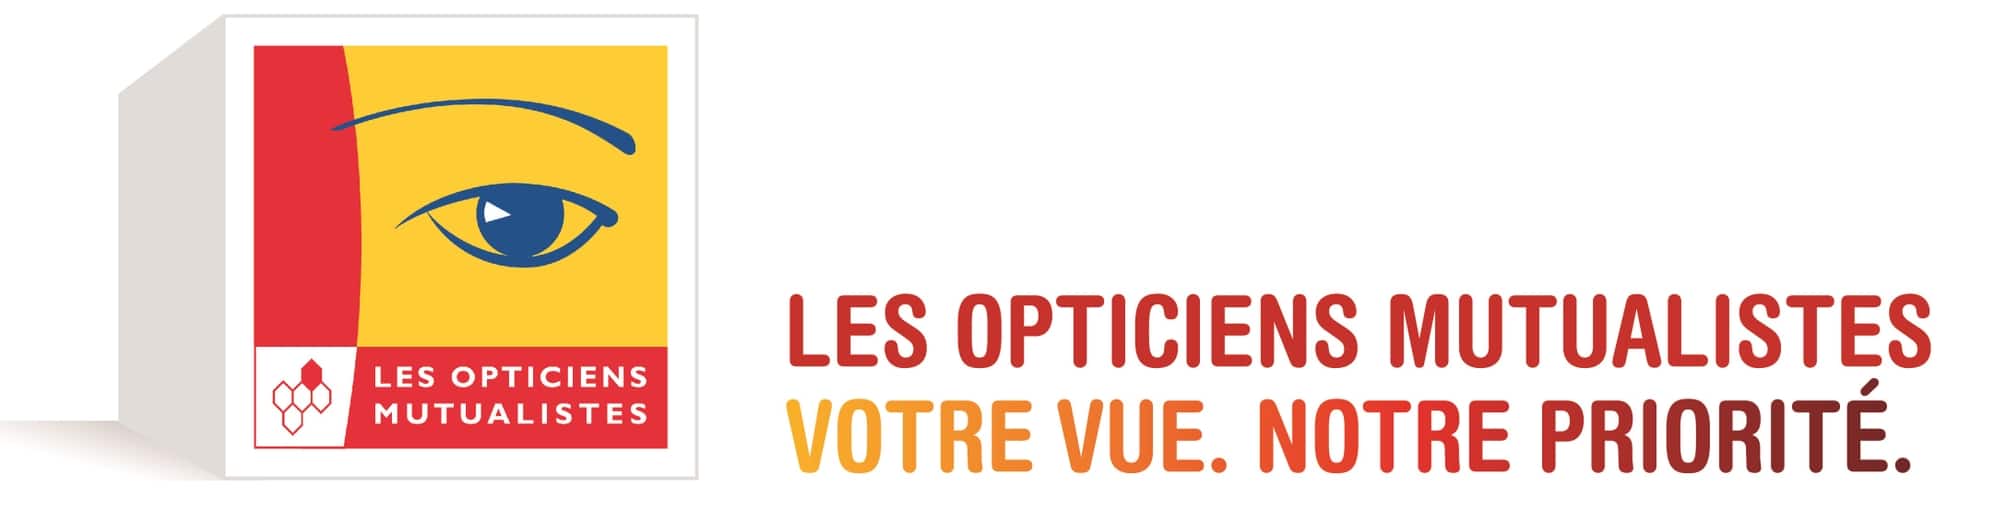 optiques-mutualiste-logo-mutuelle-du-nickel